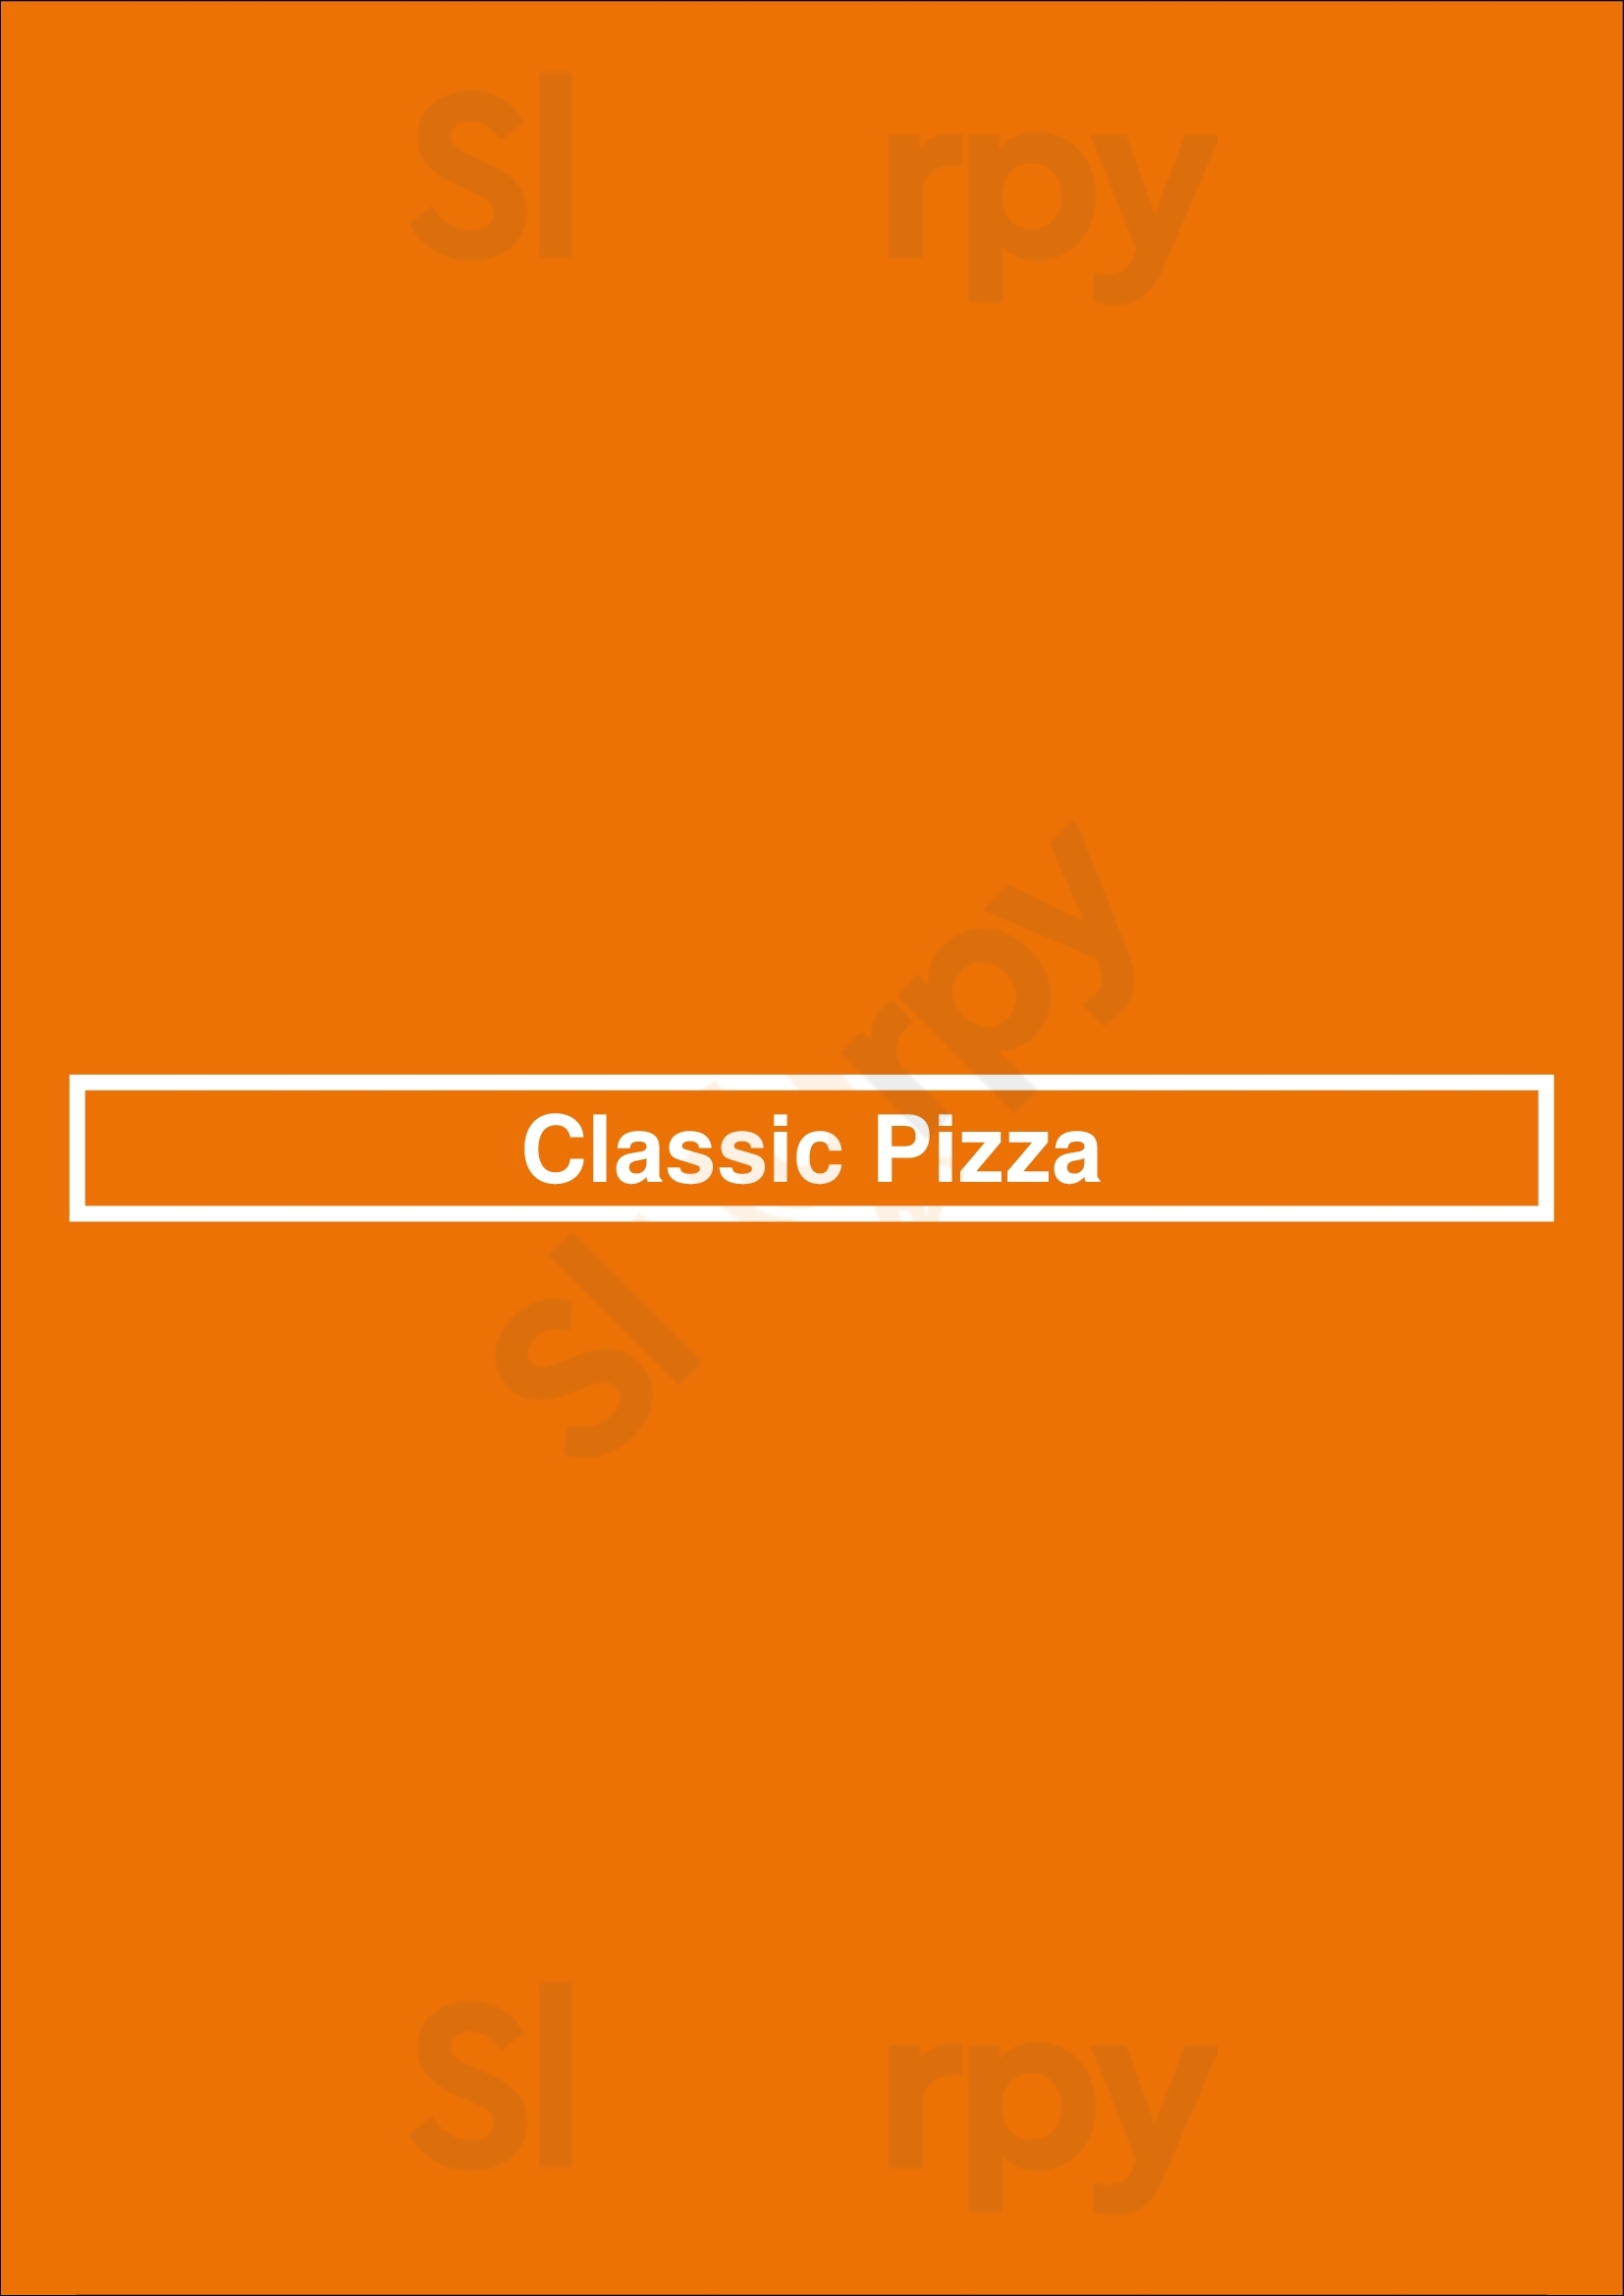 Classic Pizza Edmonton Menu - 1